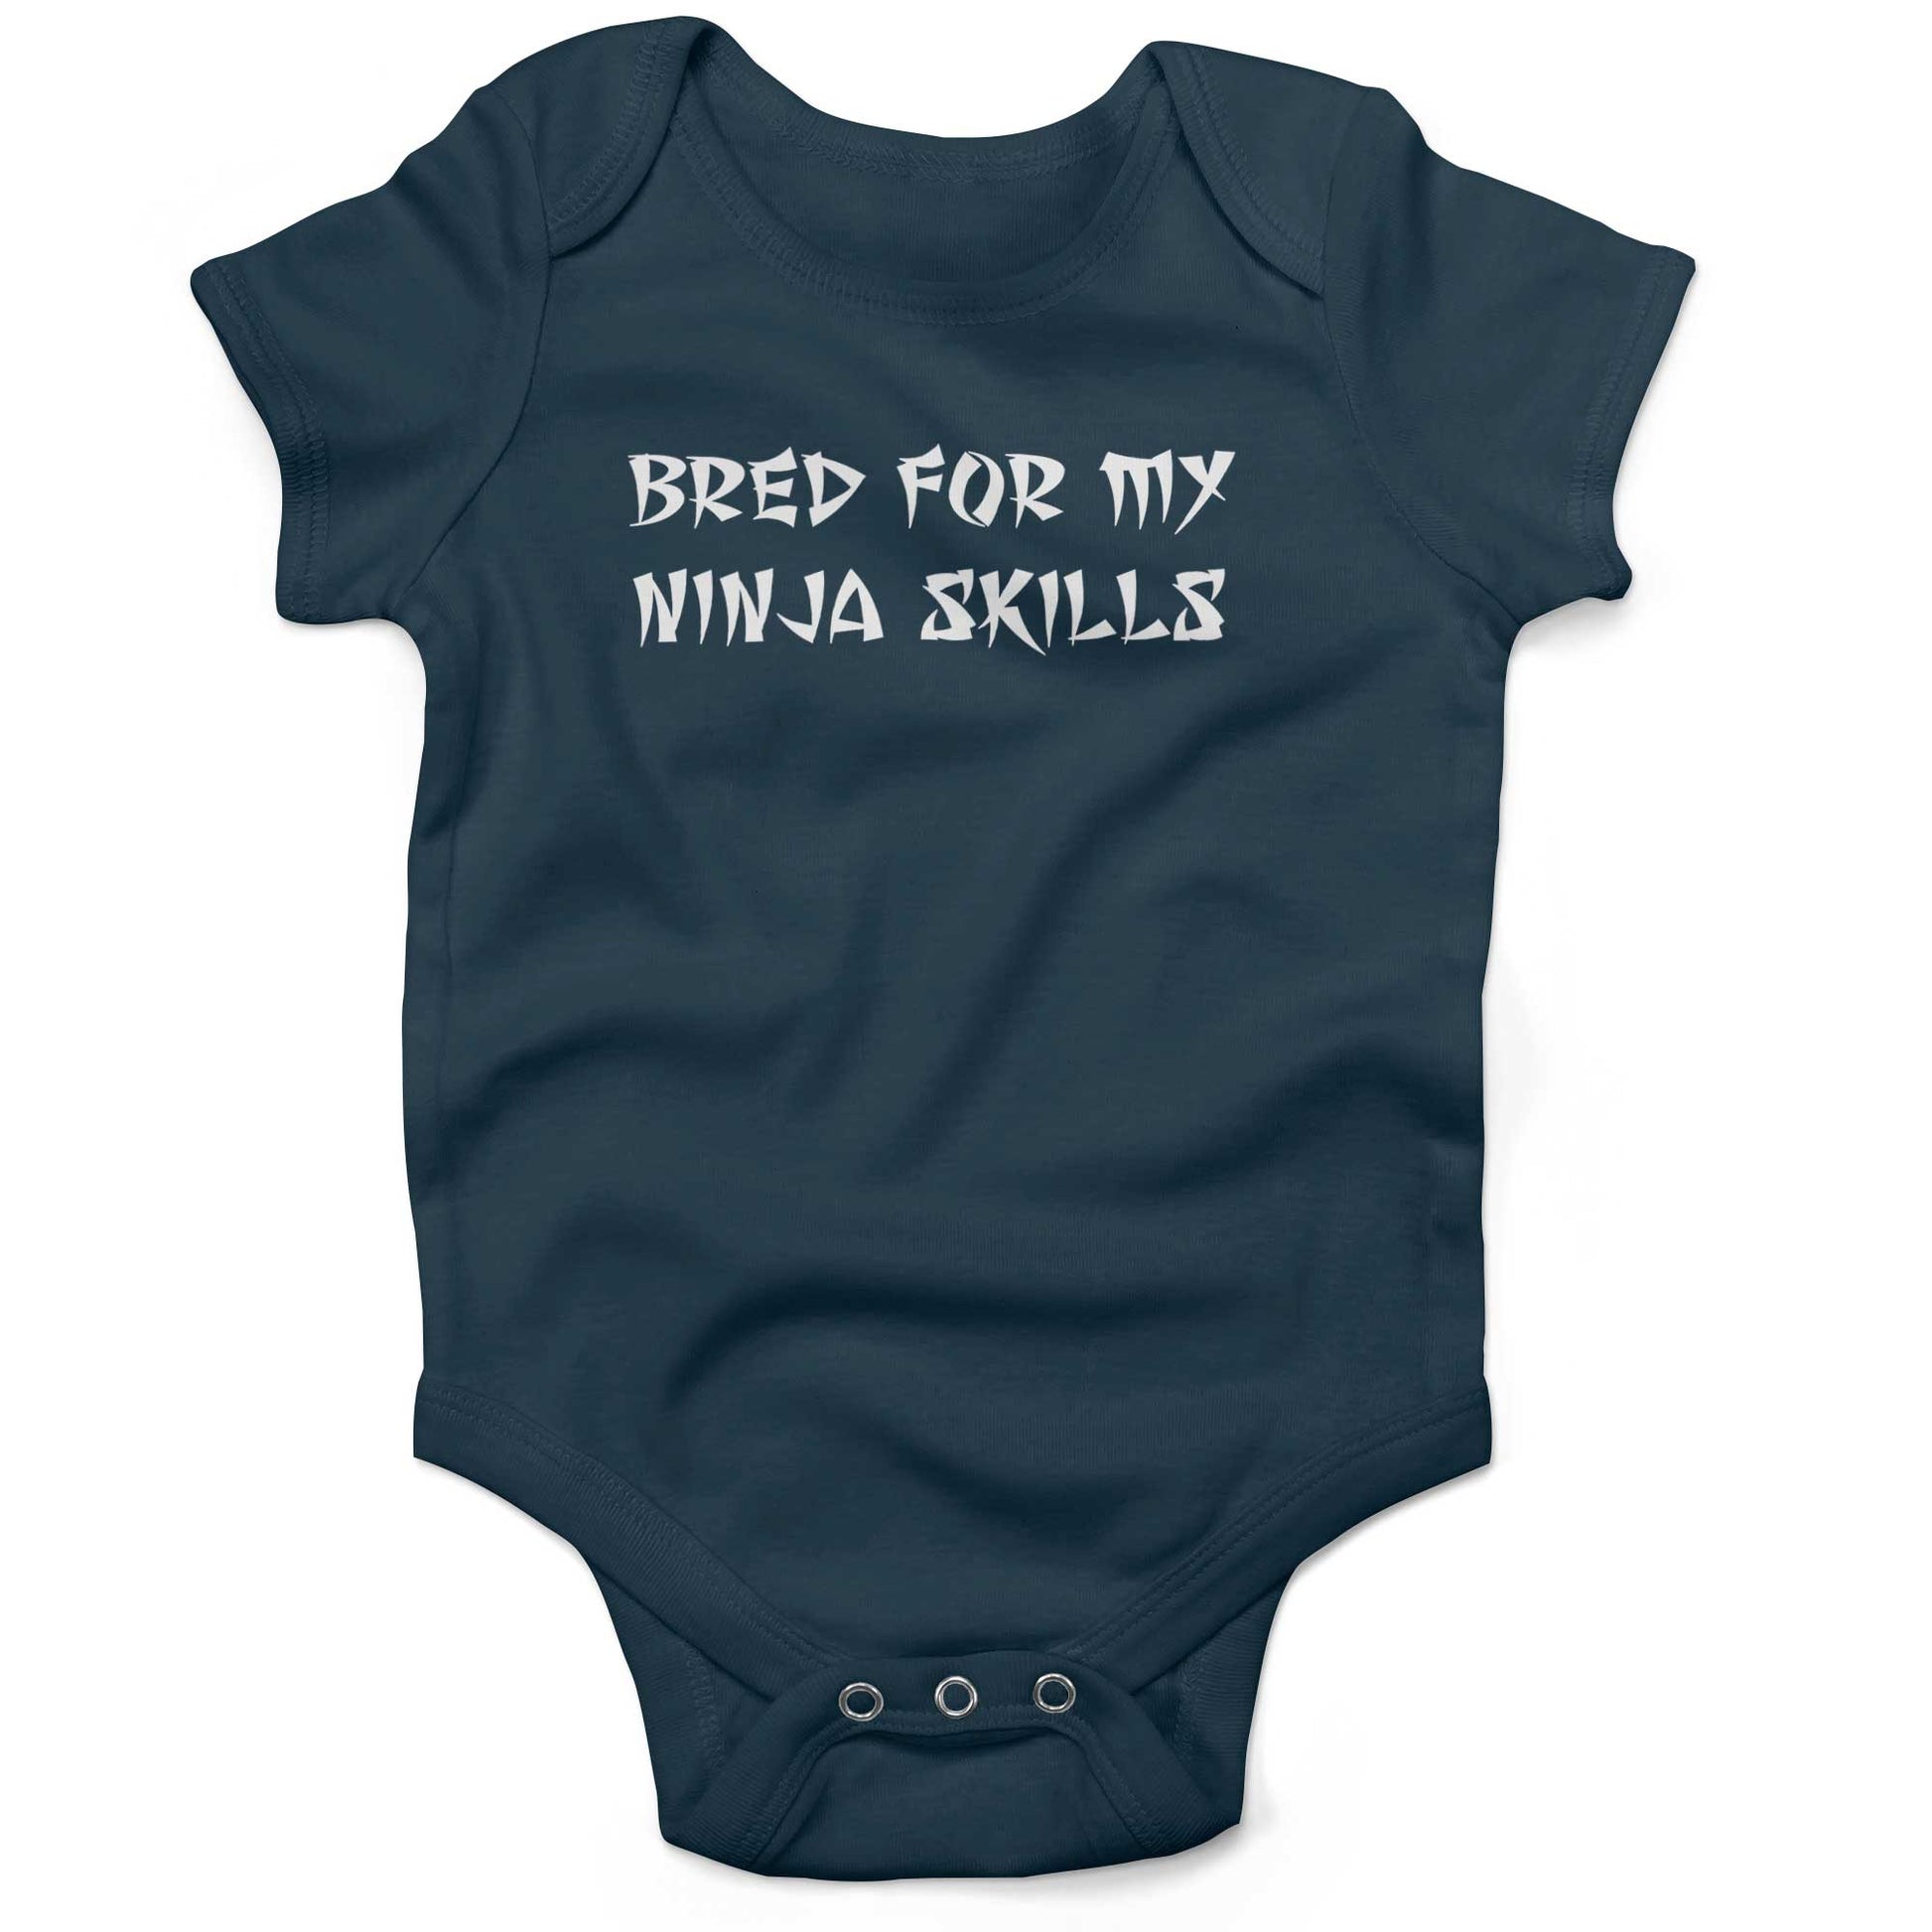 Bred For My Ninja Skills Infant Bodysuit or Raglan Baby Tee-Organic Pacific Blue-3-6 months